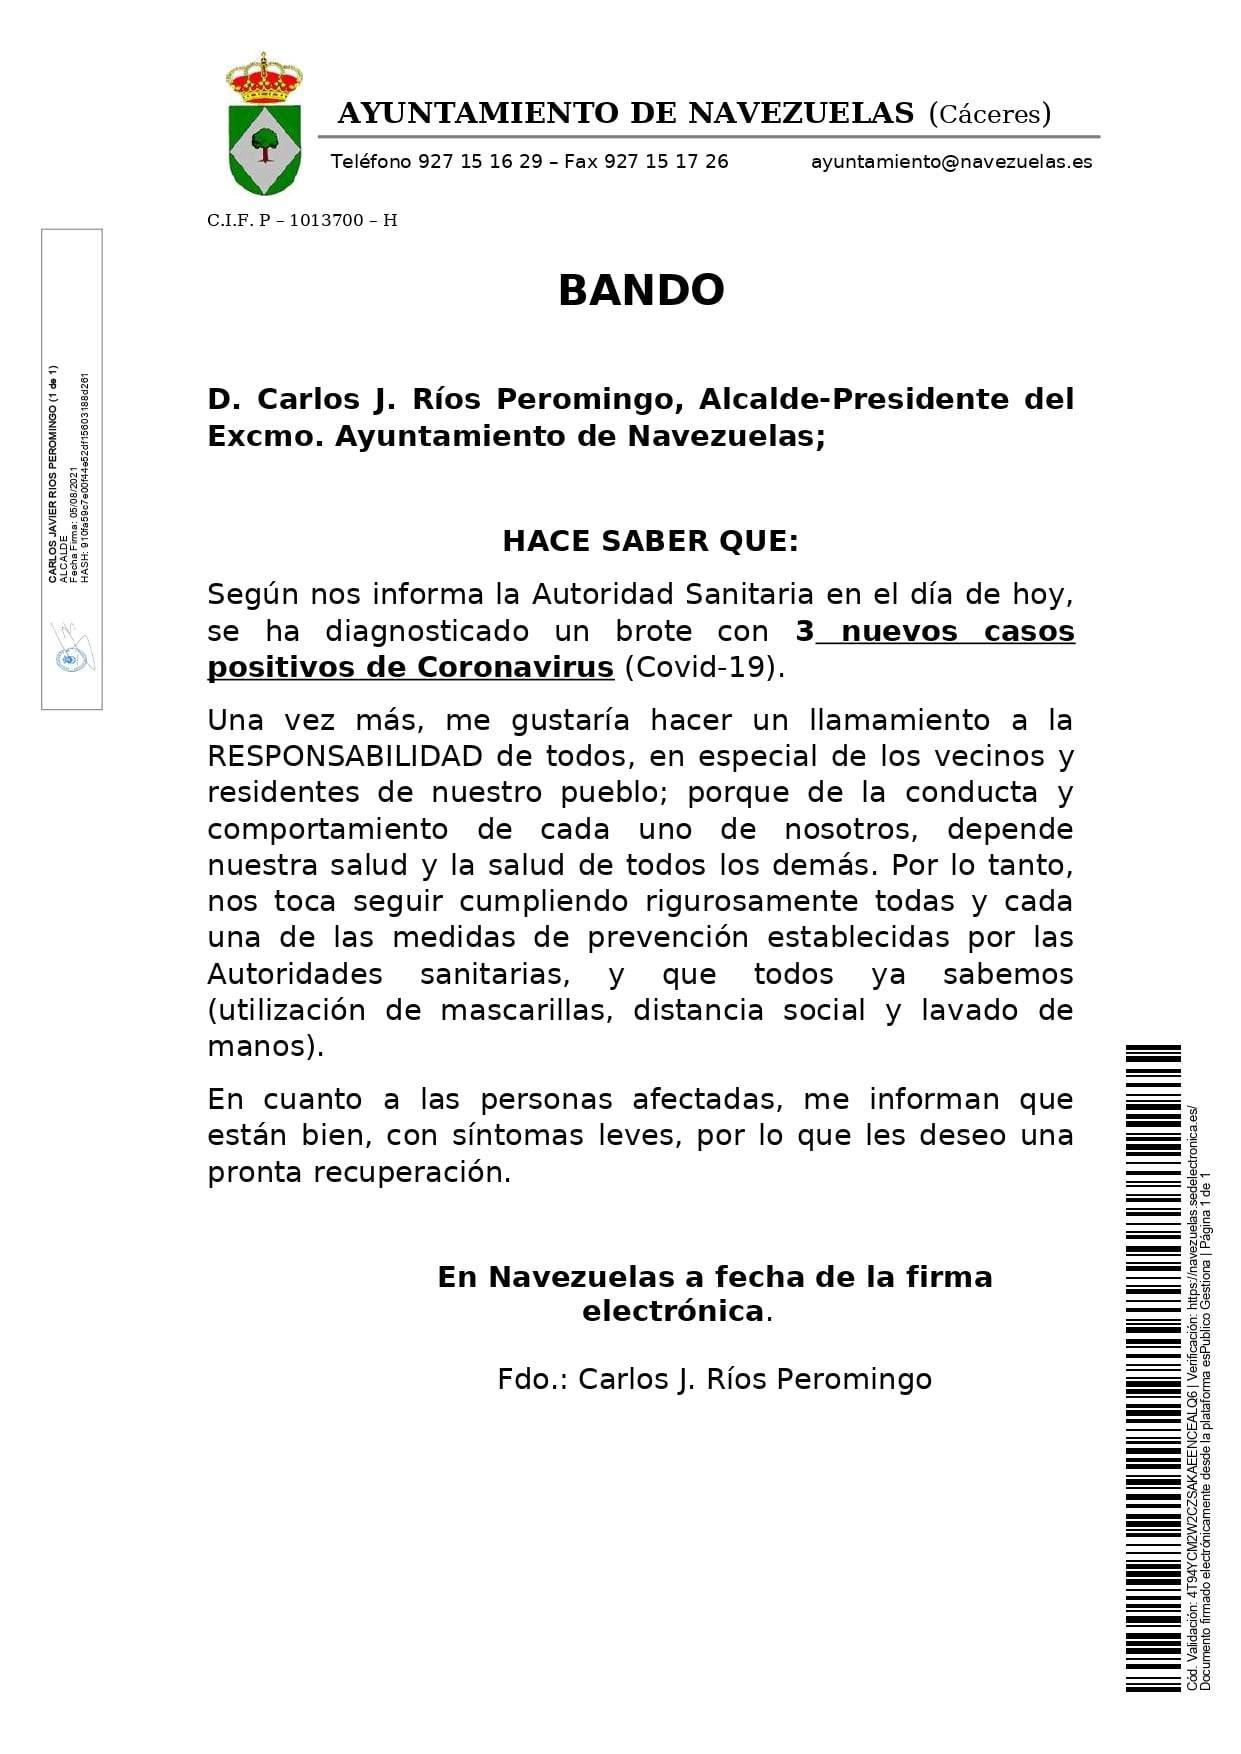 3 casos positivos activos de COVID-19 (agosto 2021) - Navezuelas (Cáceres)